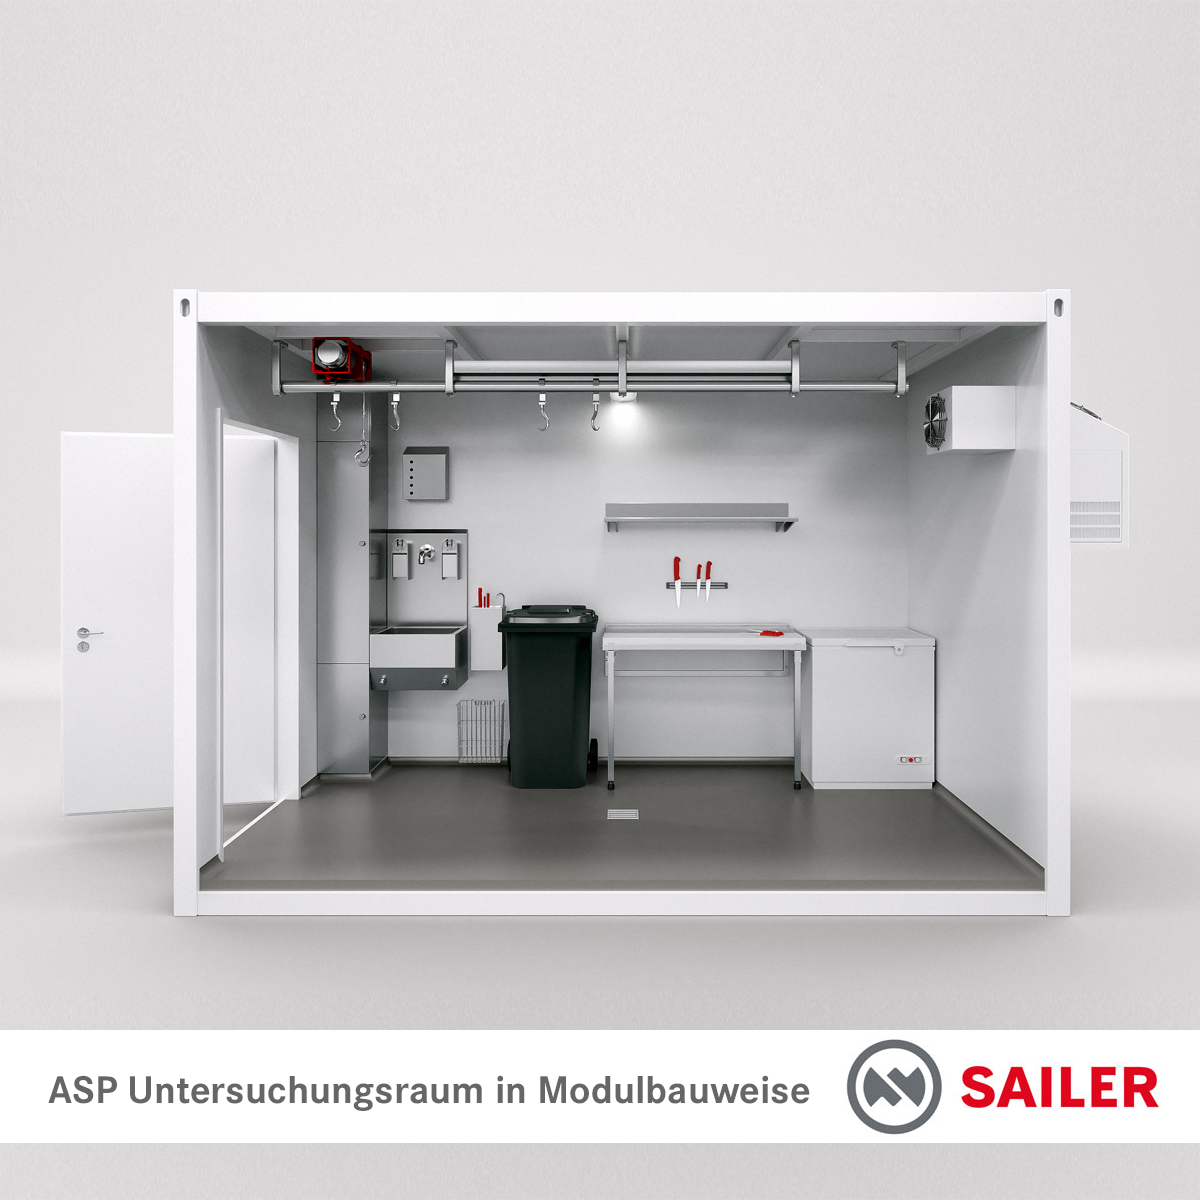 ASP Untersuchungsraum in Modulbauweise / Container, ArtNr.: WSZRM_ASP